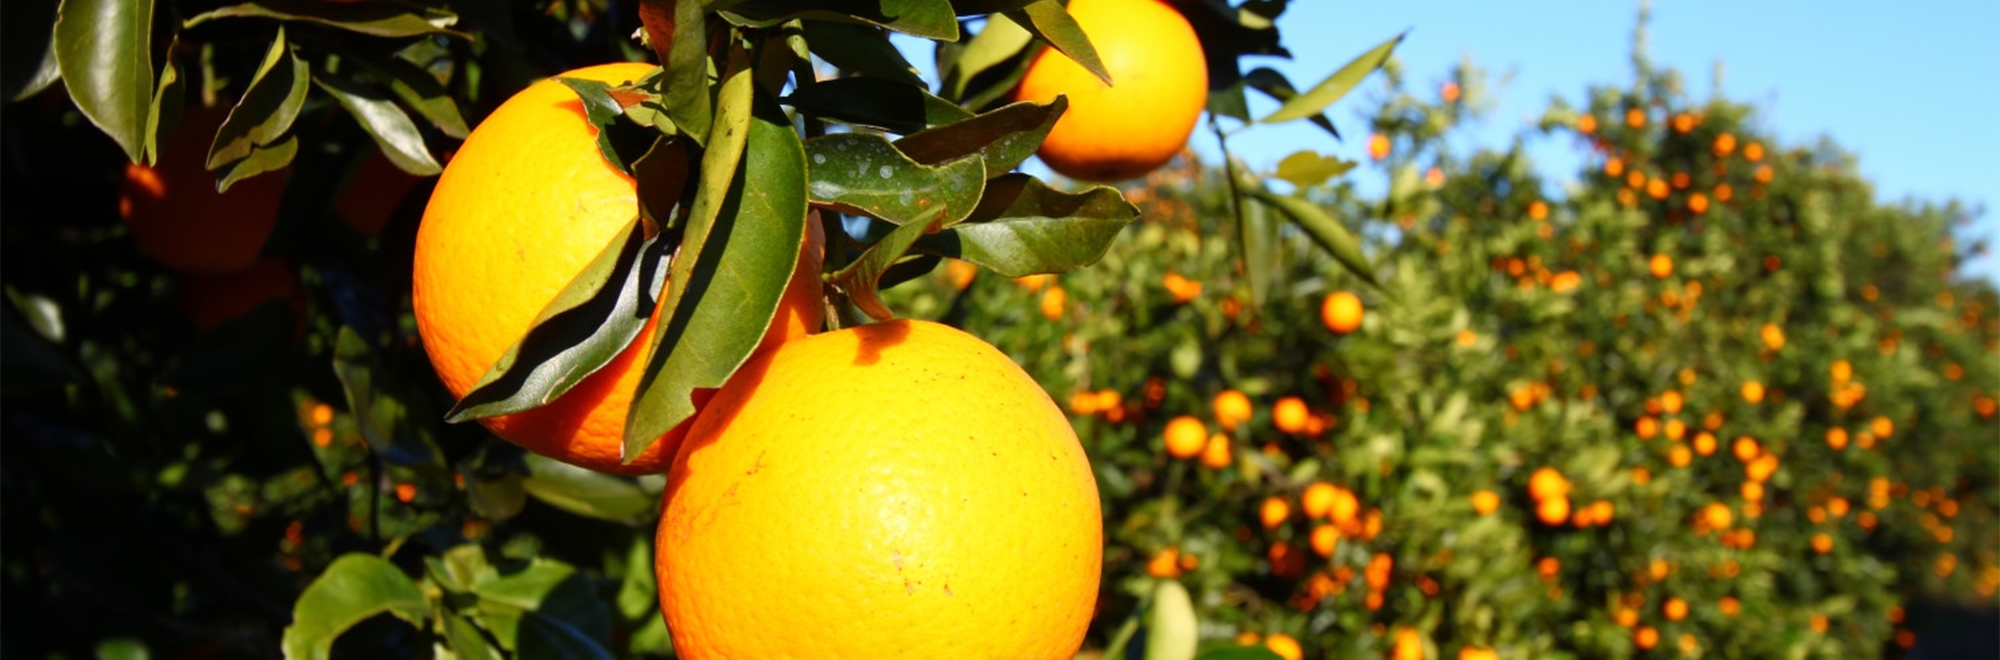 How a marketer invented orange juice